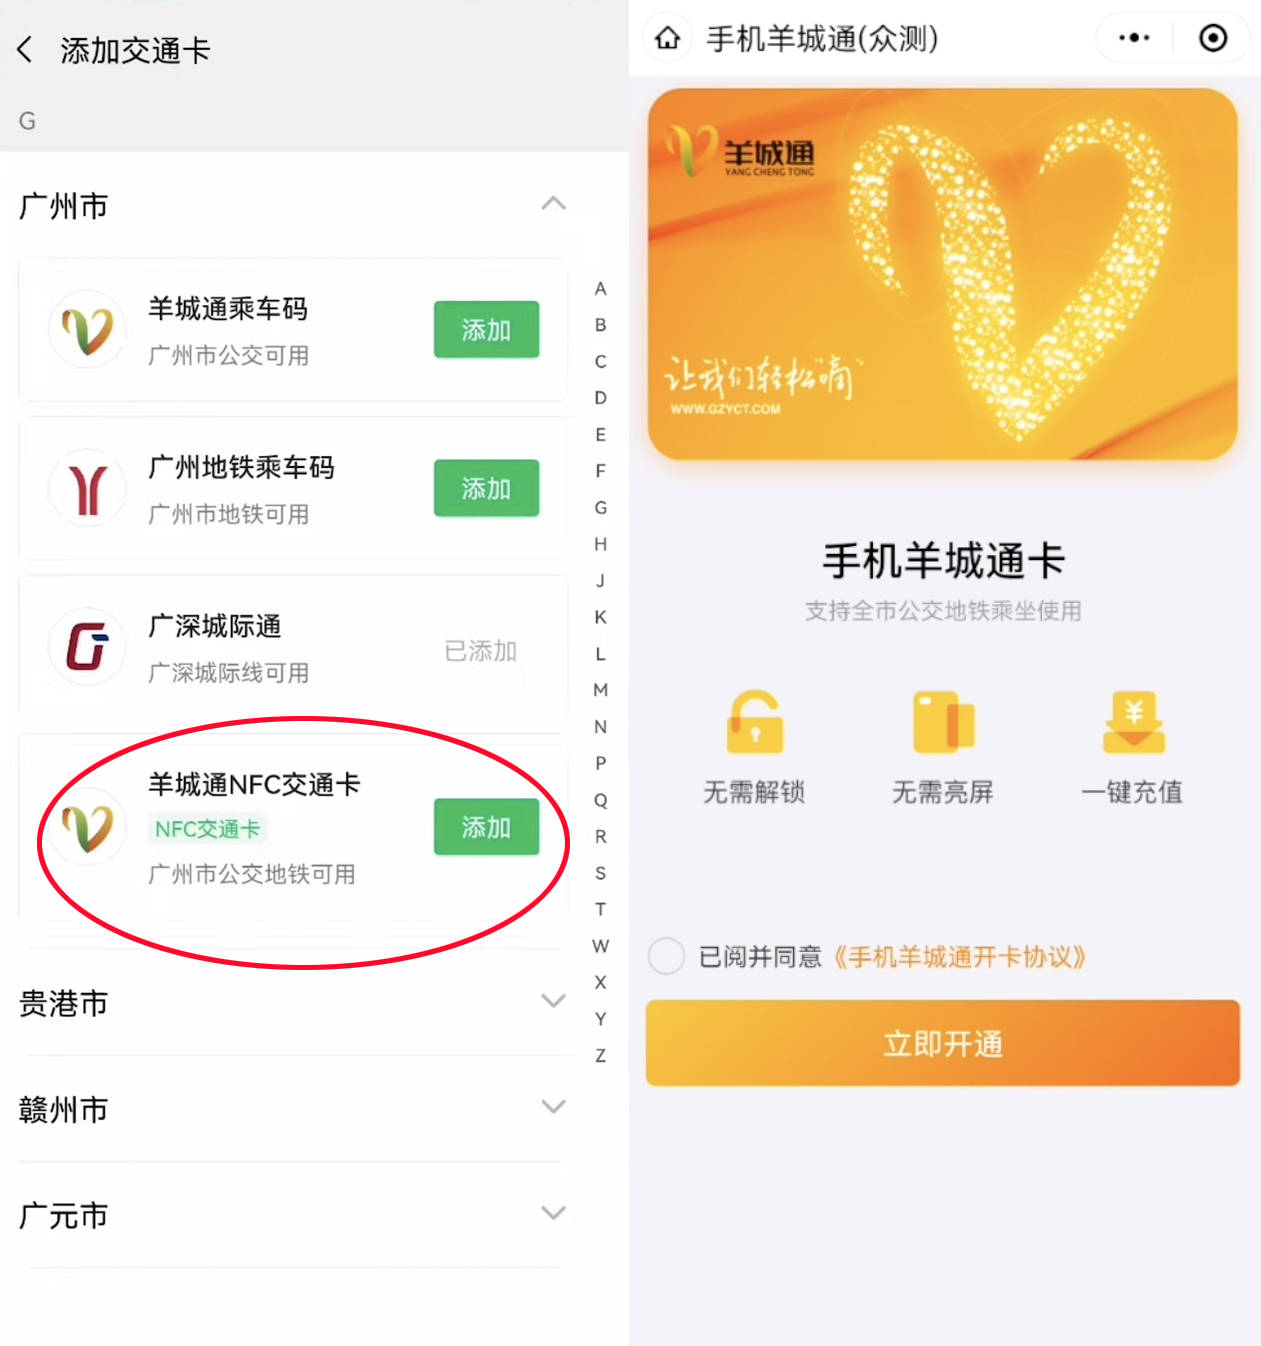 NFC交通卡小程序广州上线，支持微信支付自动划扣，助力低碳、便捷乘车